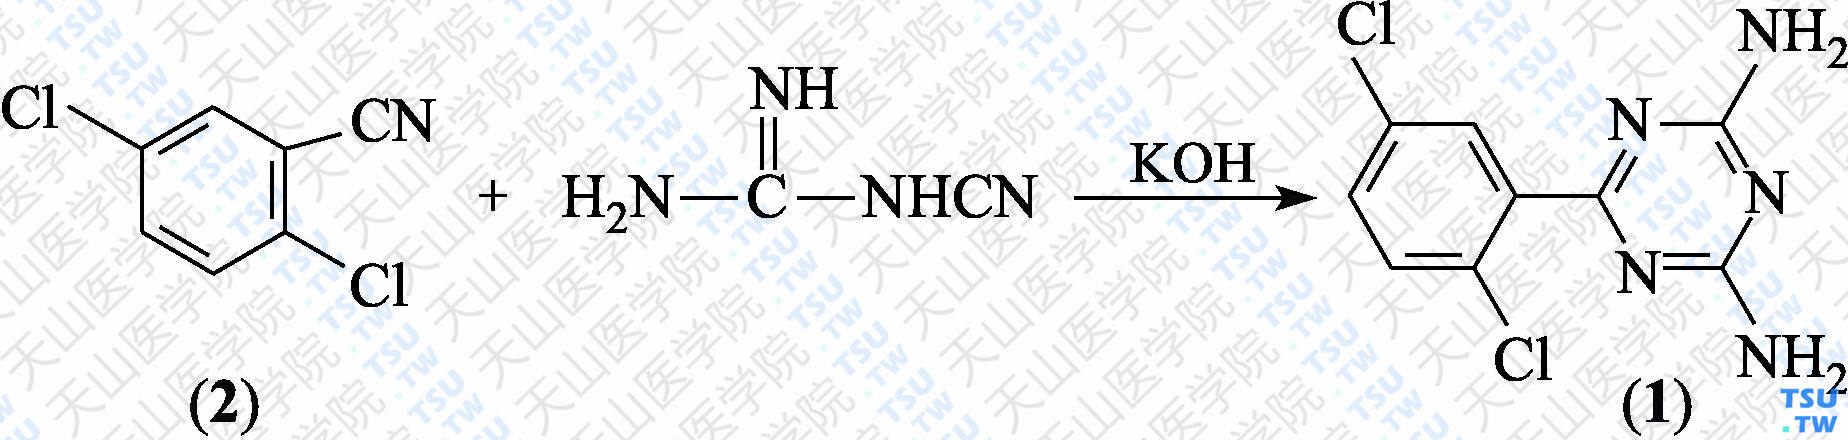 伊索拉定（分子式：C<sub>9</sub>H<sub>7</sub>Cl<sub>2</sub>N<sub>5</sub>）的合成方法路线及其结构式